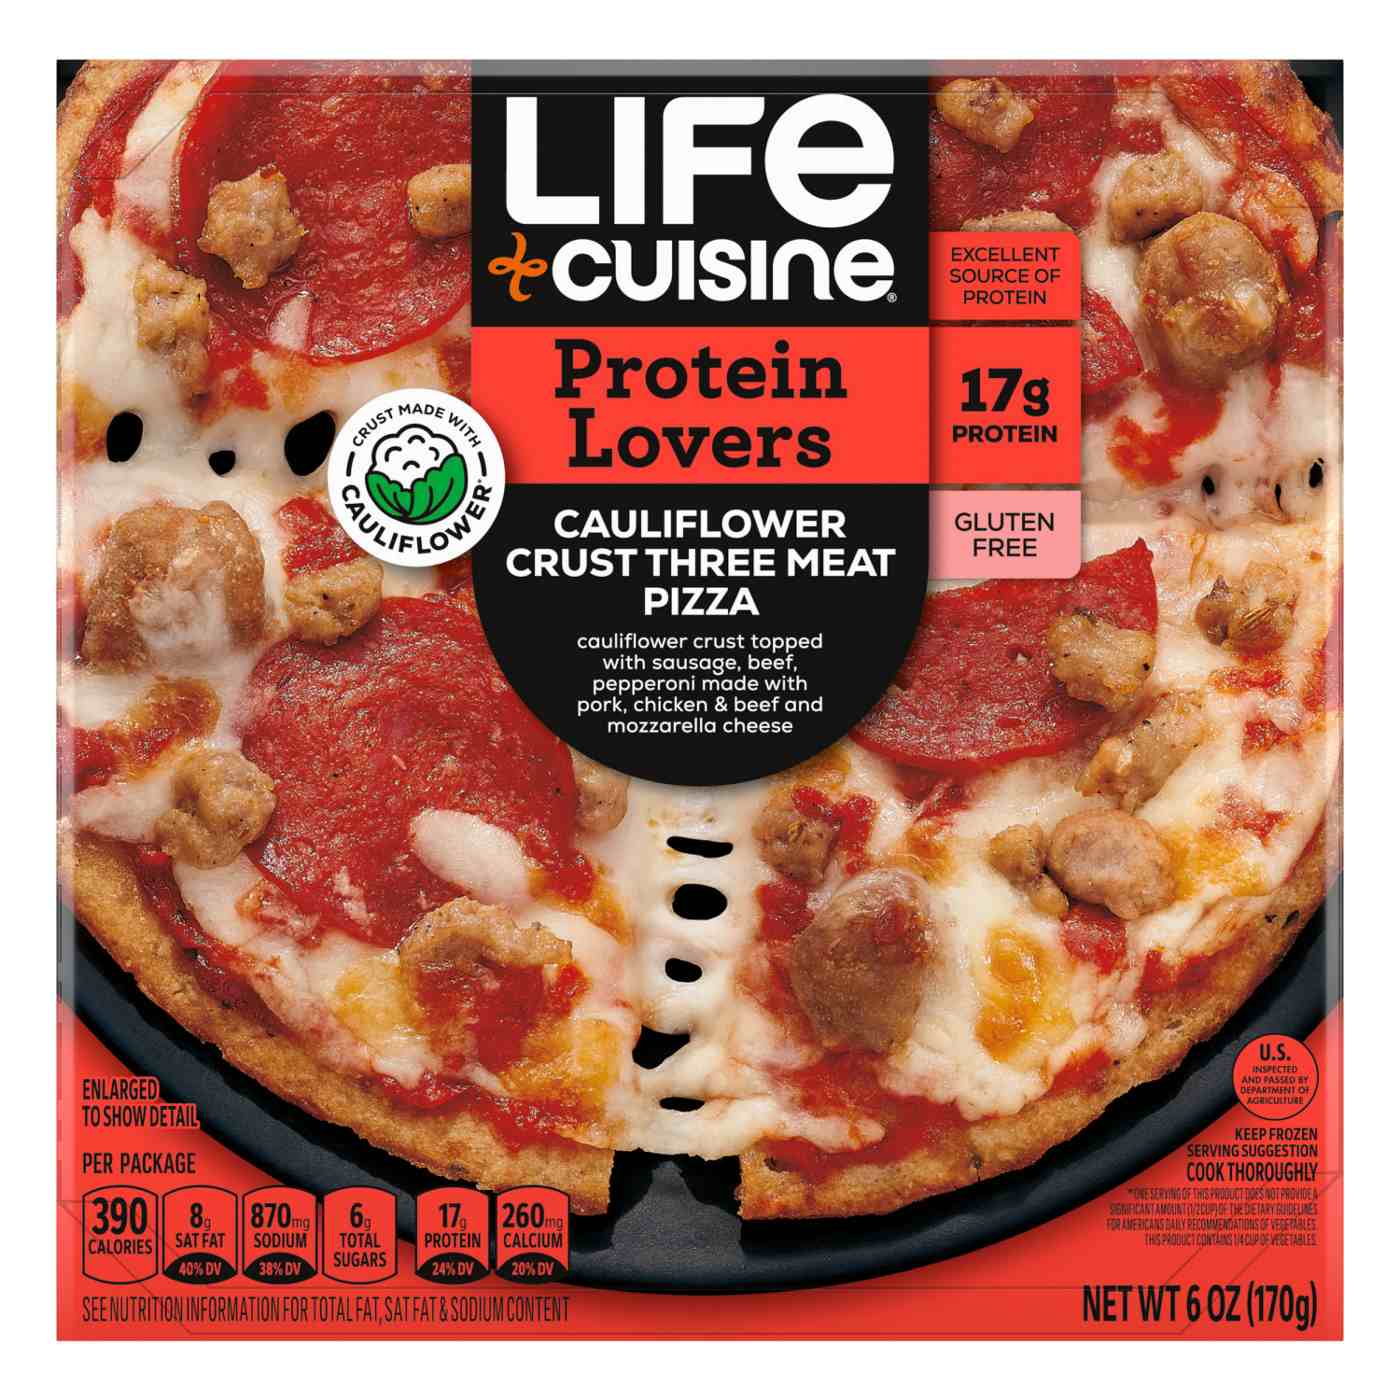 Life Cuisine 17g Protein Cauliflower Frozen Pizza - Three Meat; image 1 of 3